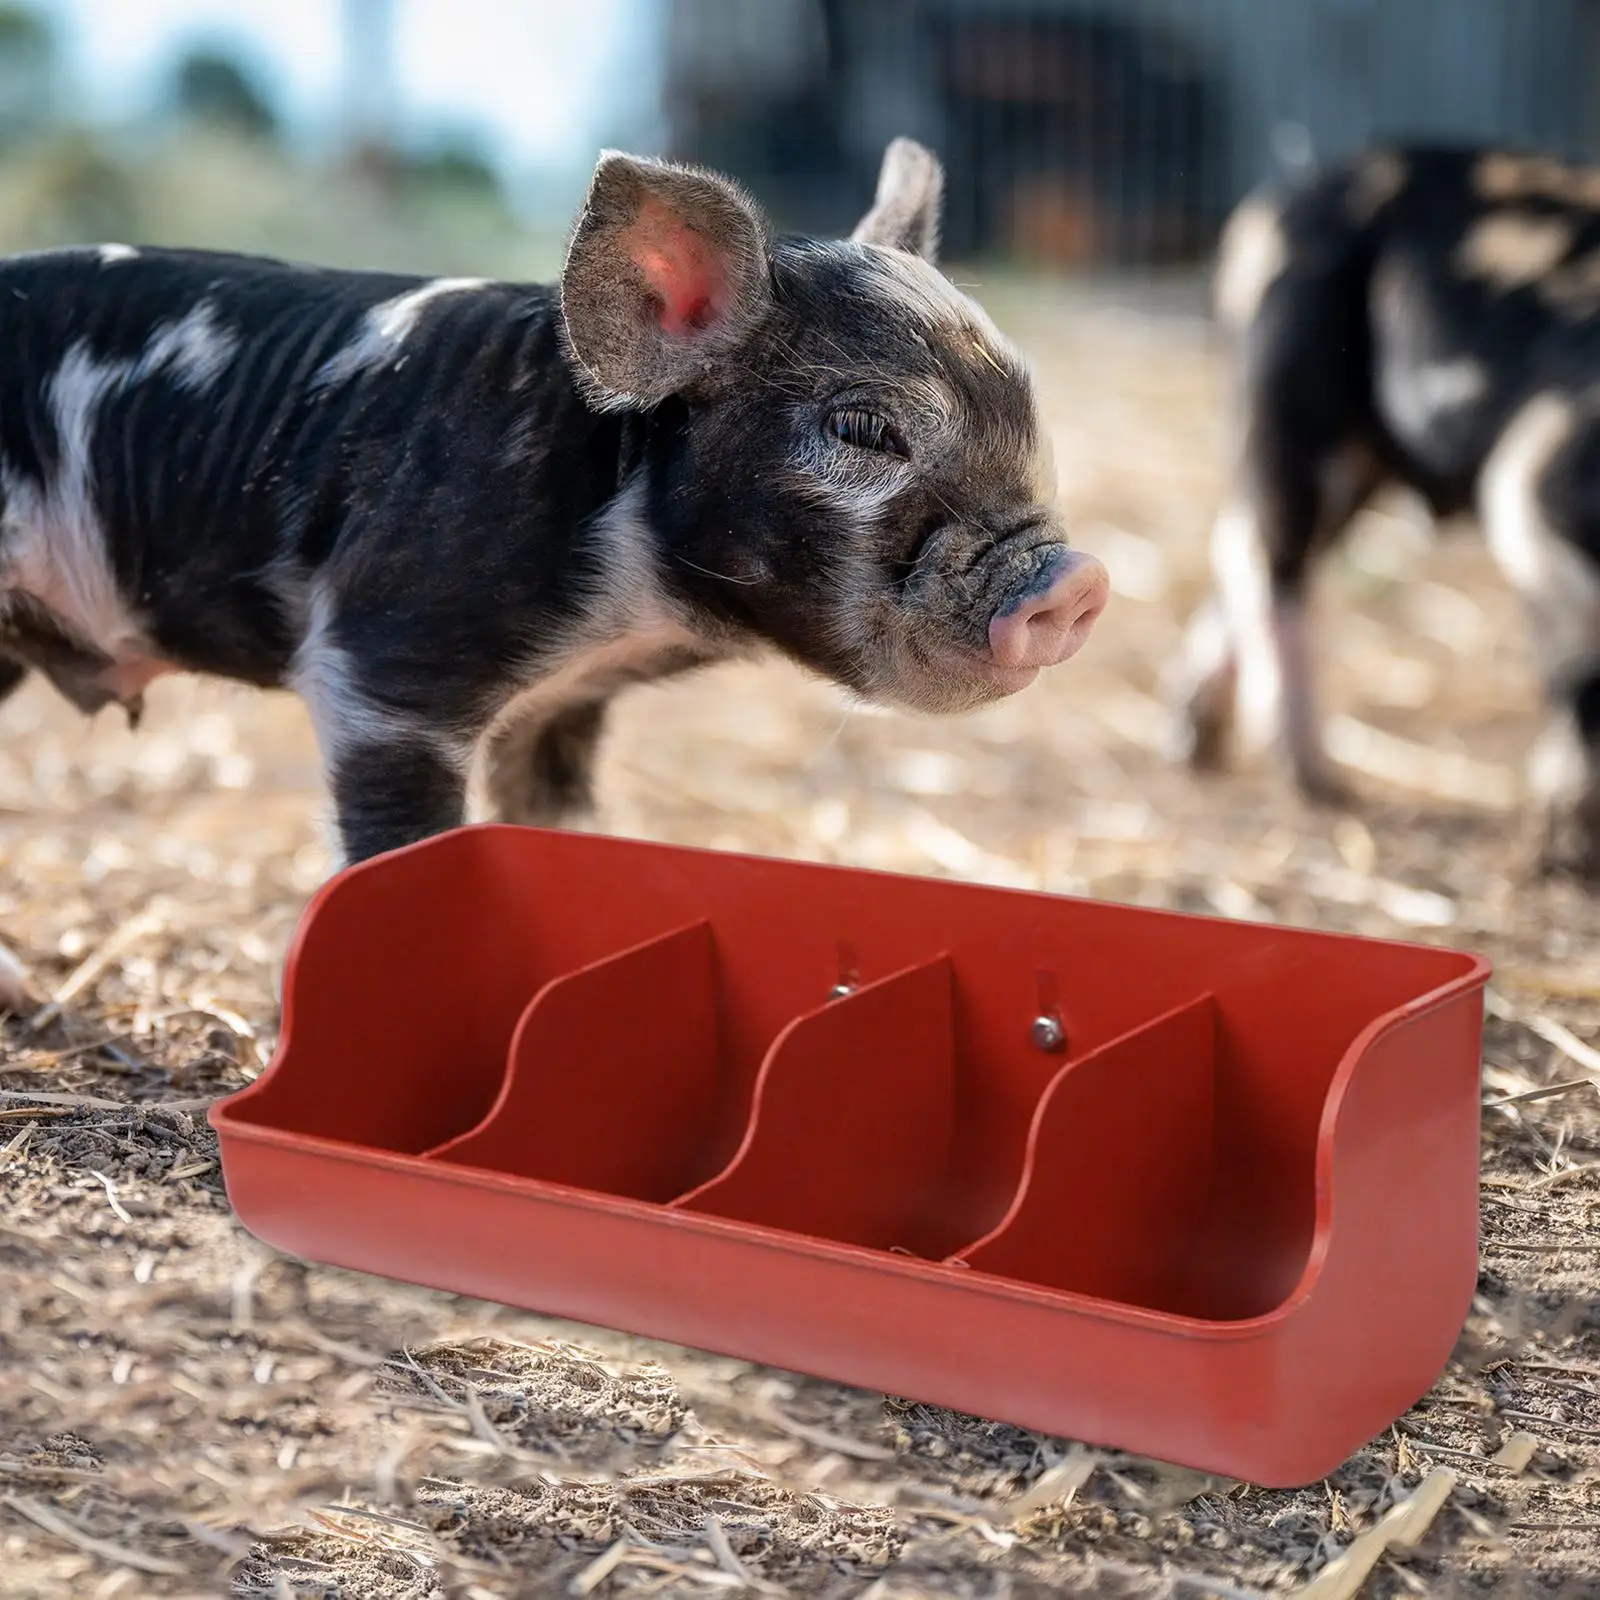 Pig Food Feeder Cattle Tray Growers Farm Animal Supplies Piglet Fodder Slot